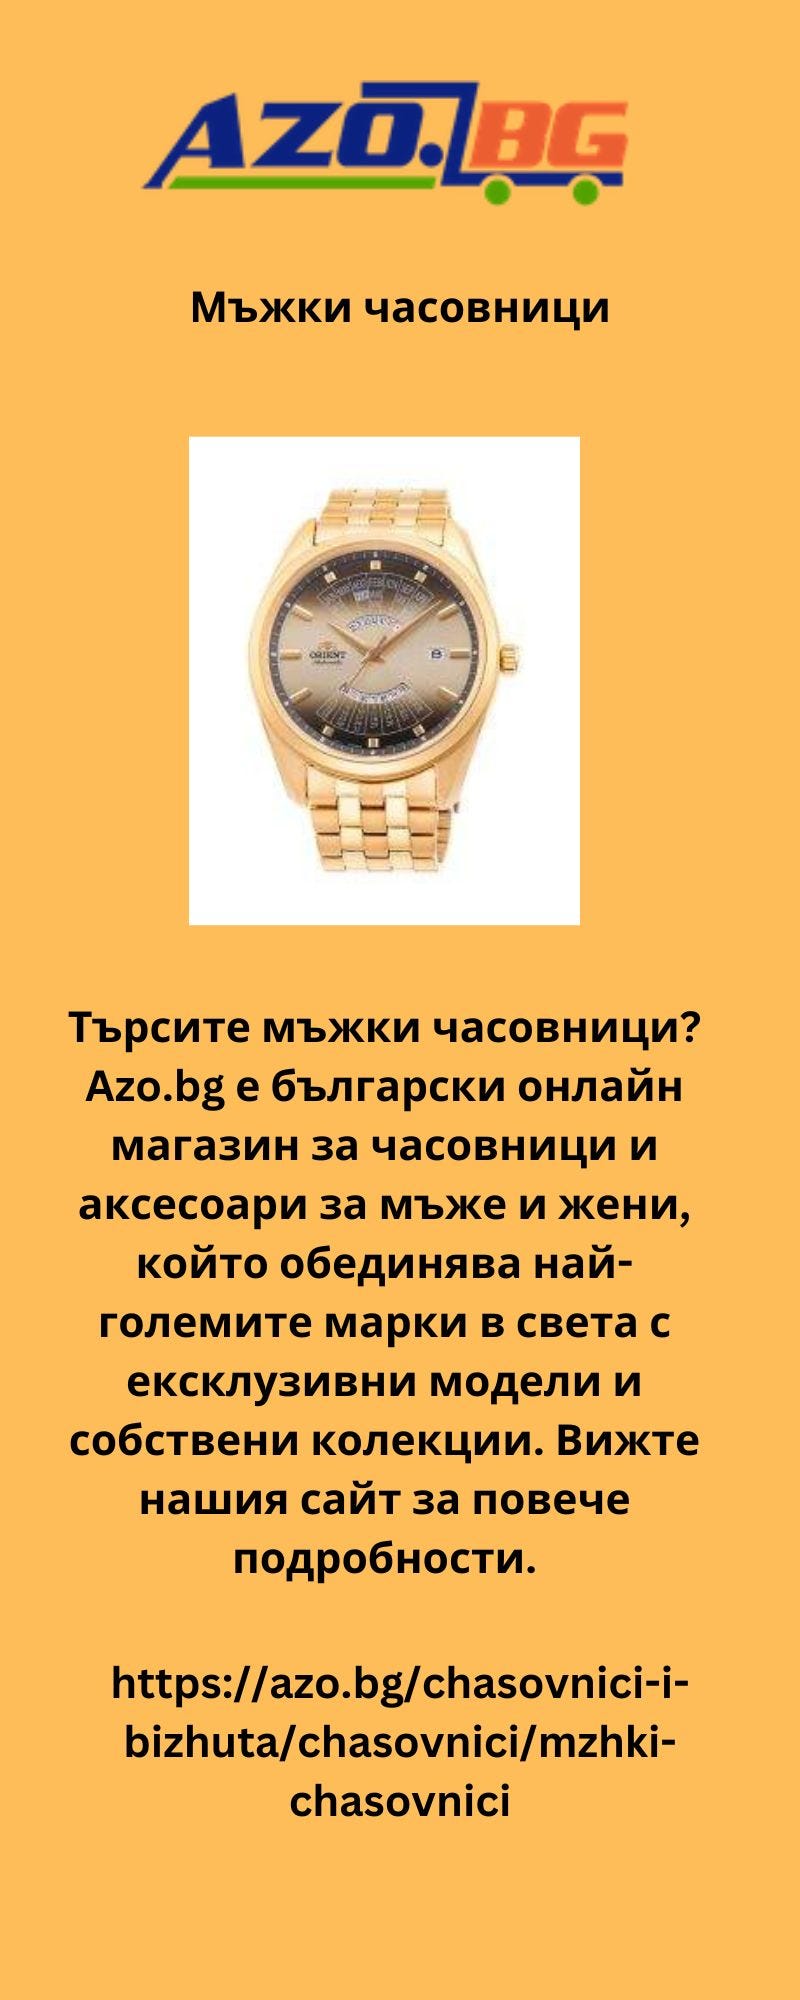 Mъжки часовници - Azonlinepllc - Medium